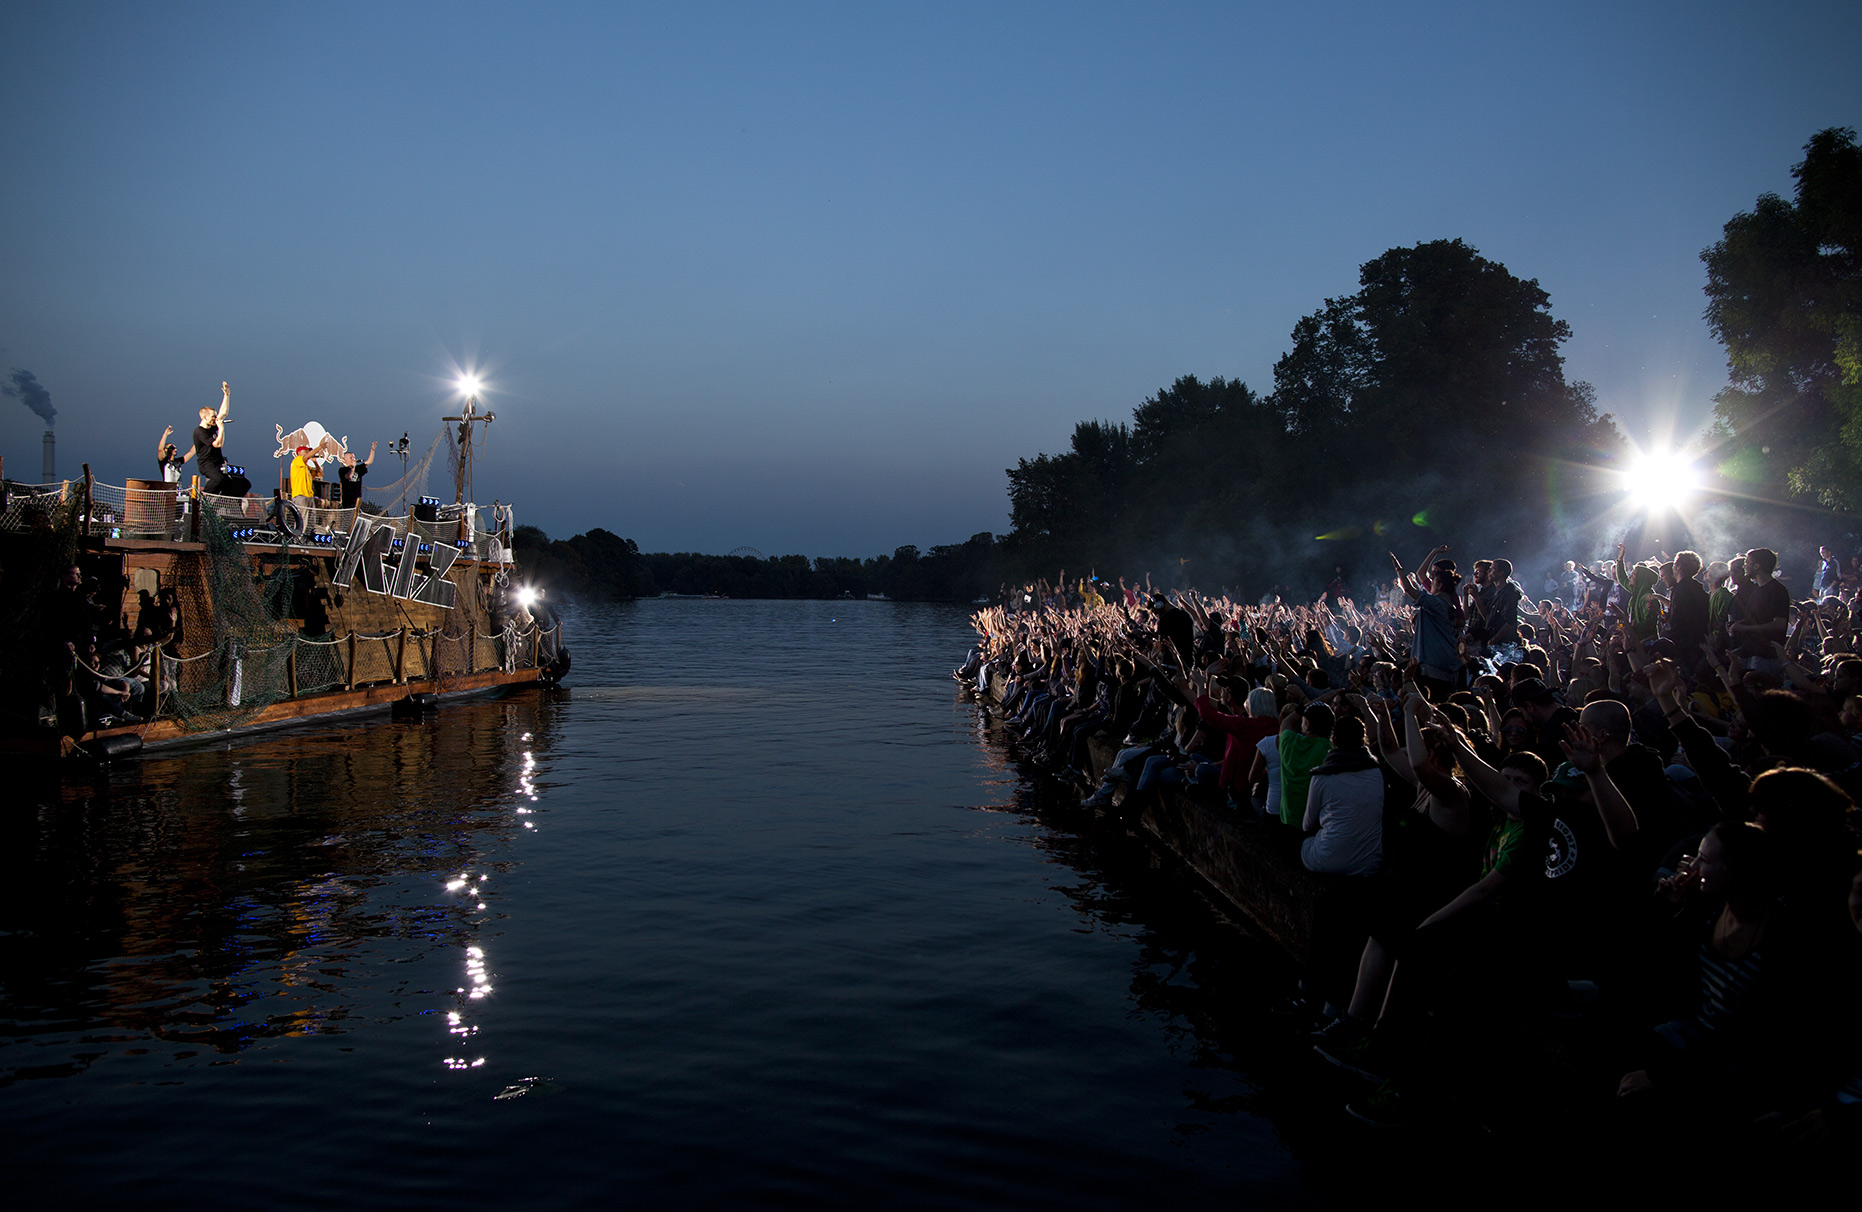 © Dirk Mathesius, K.I.Z. performs at the RedBull Guerilla Boat, Berlin, Treptower Park, Spree